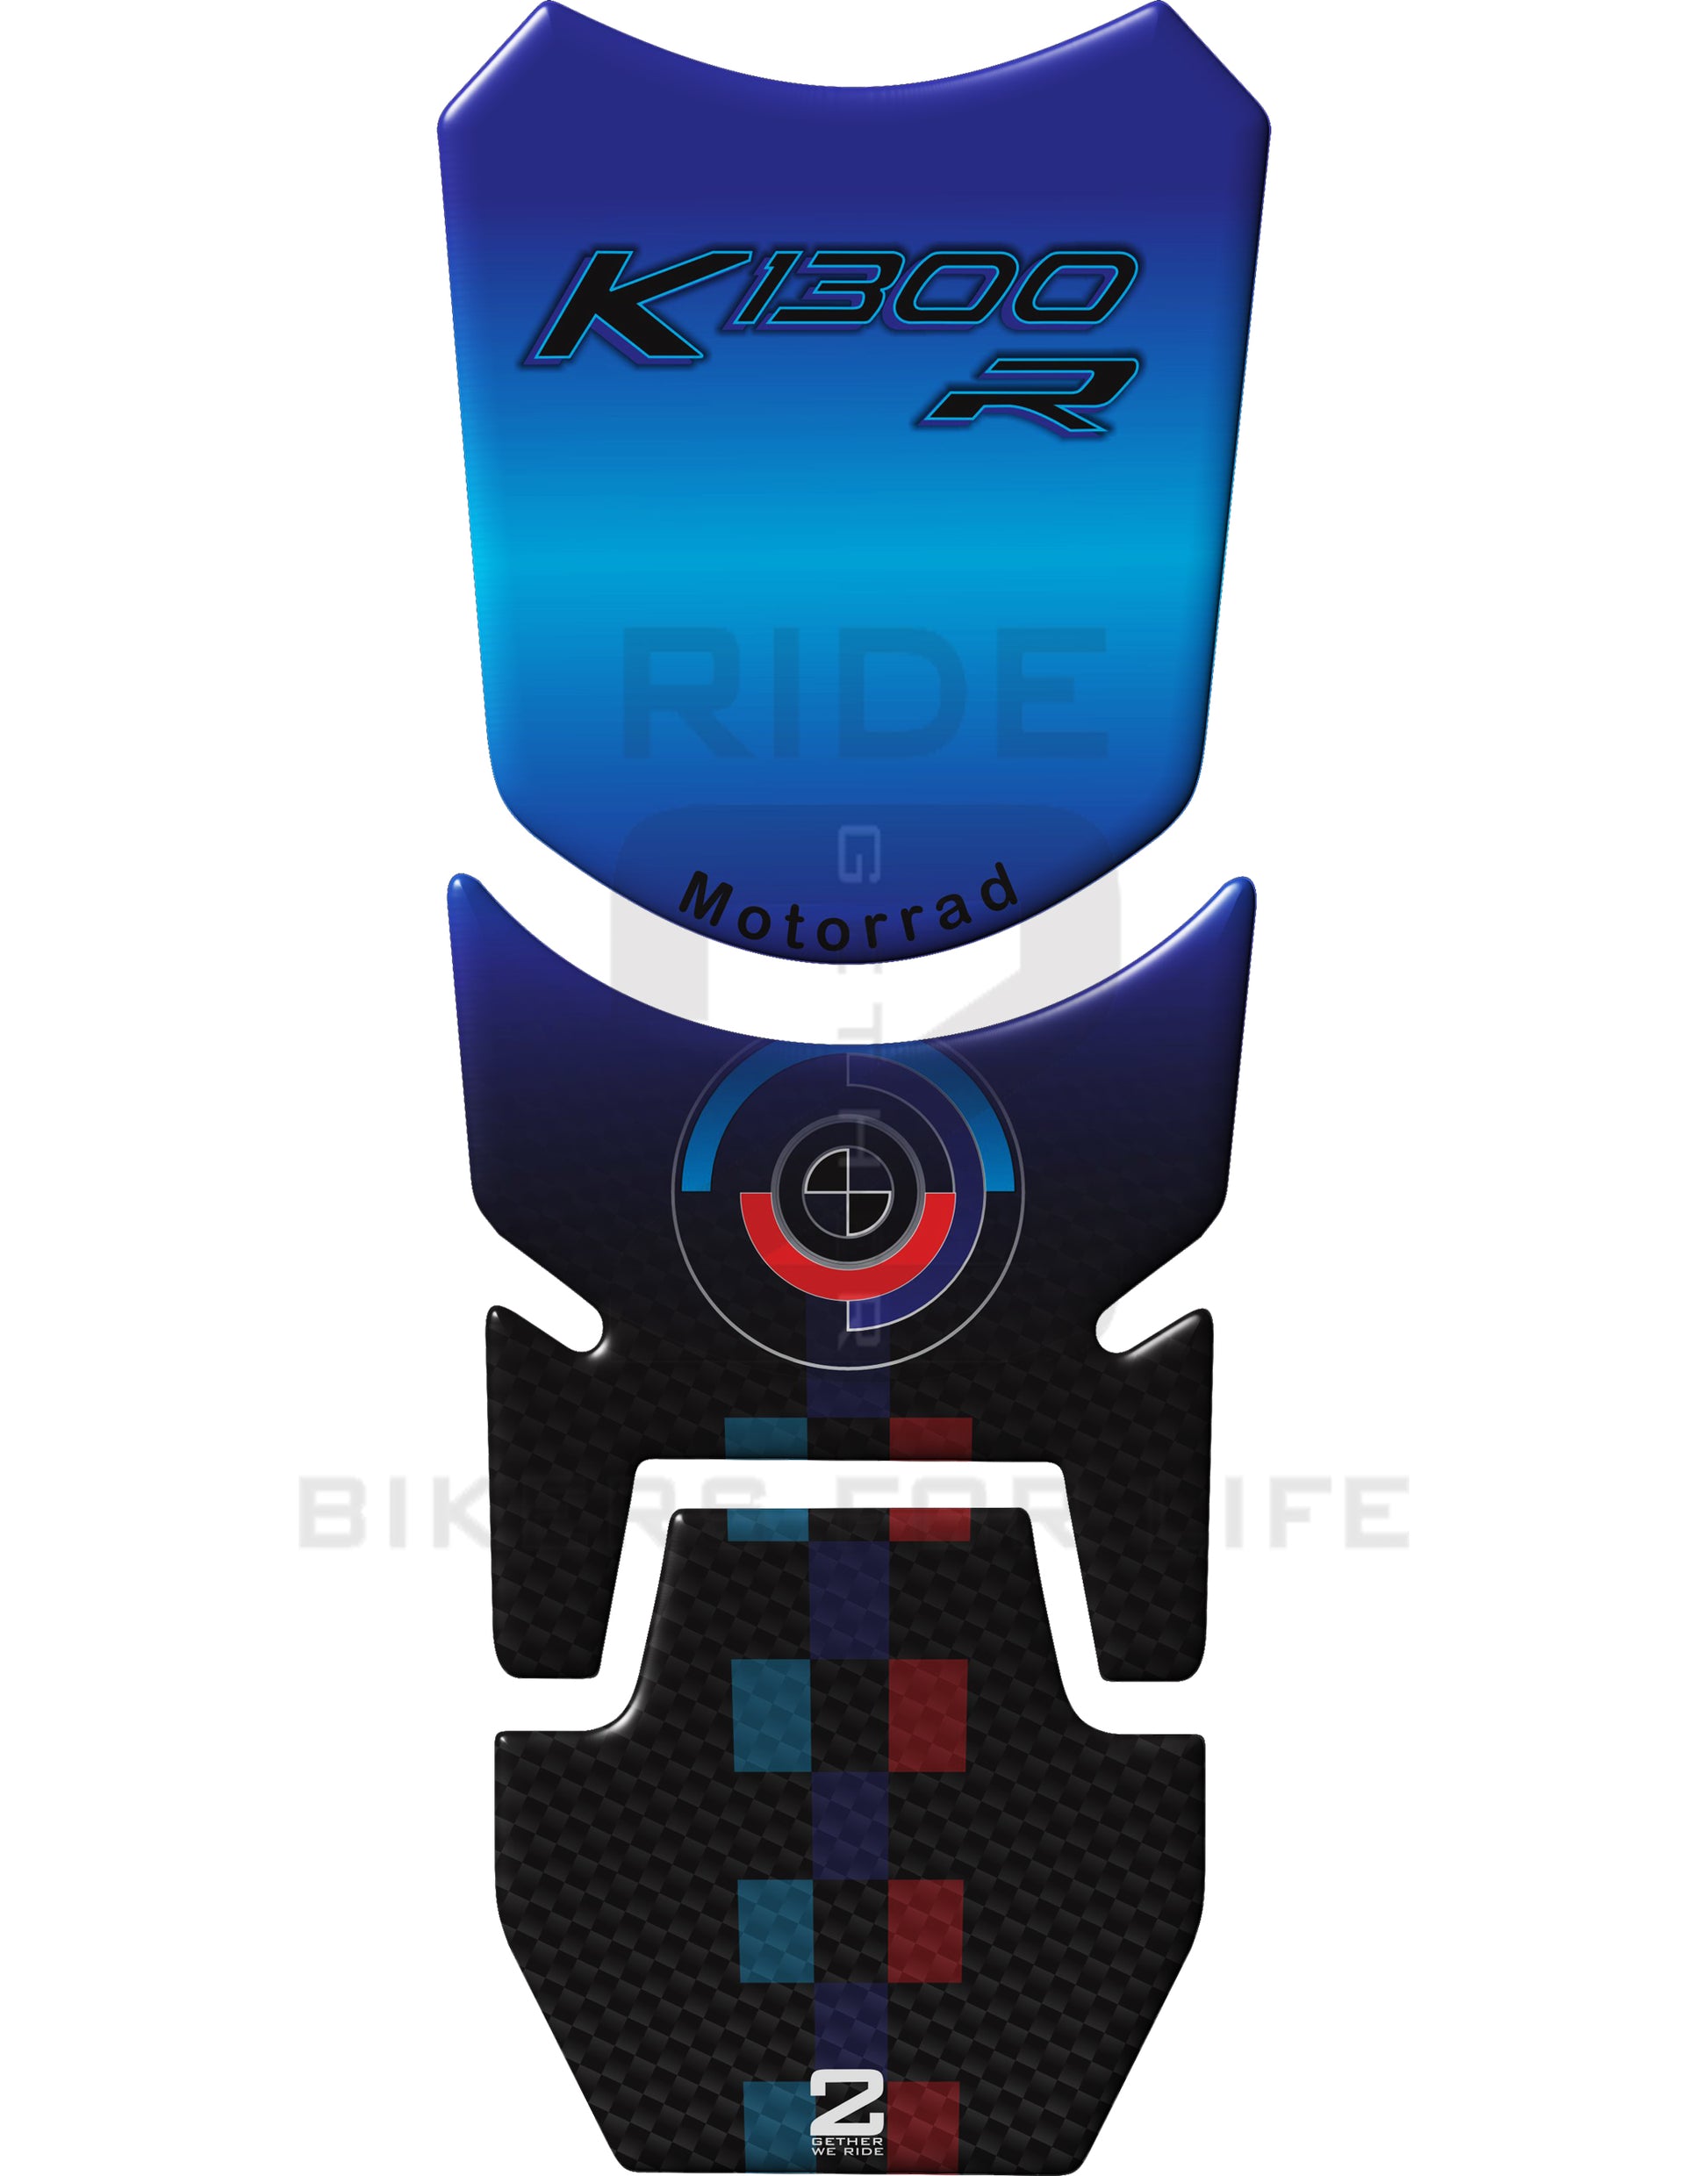 BMW K 1300 R Blue and Black Motor Bike Tank Pad Protector. Standard Fit